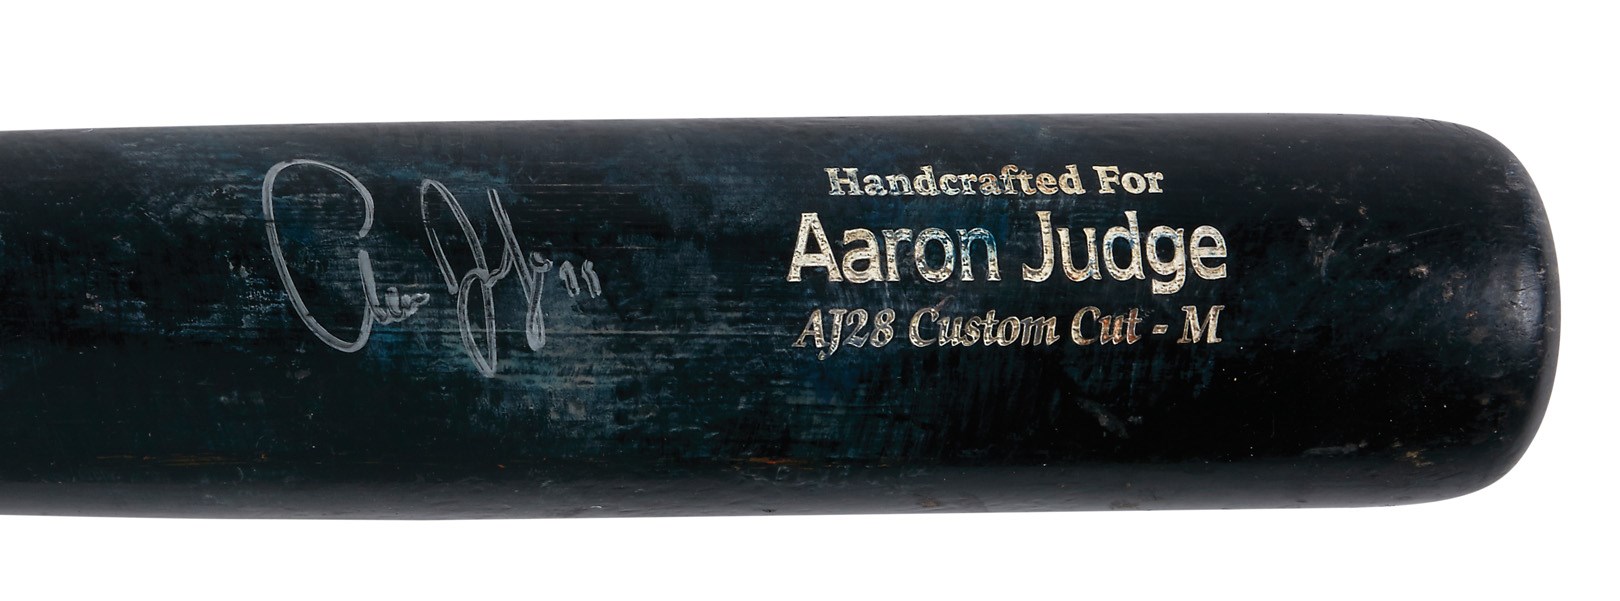 - 2016 Aaron Judge Signed Game Used Bat (PSA GU 10, Photo-Matched)